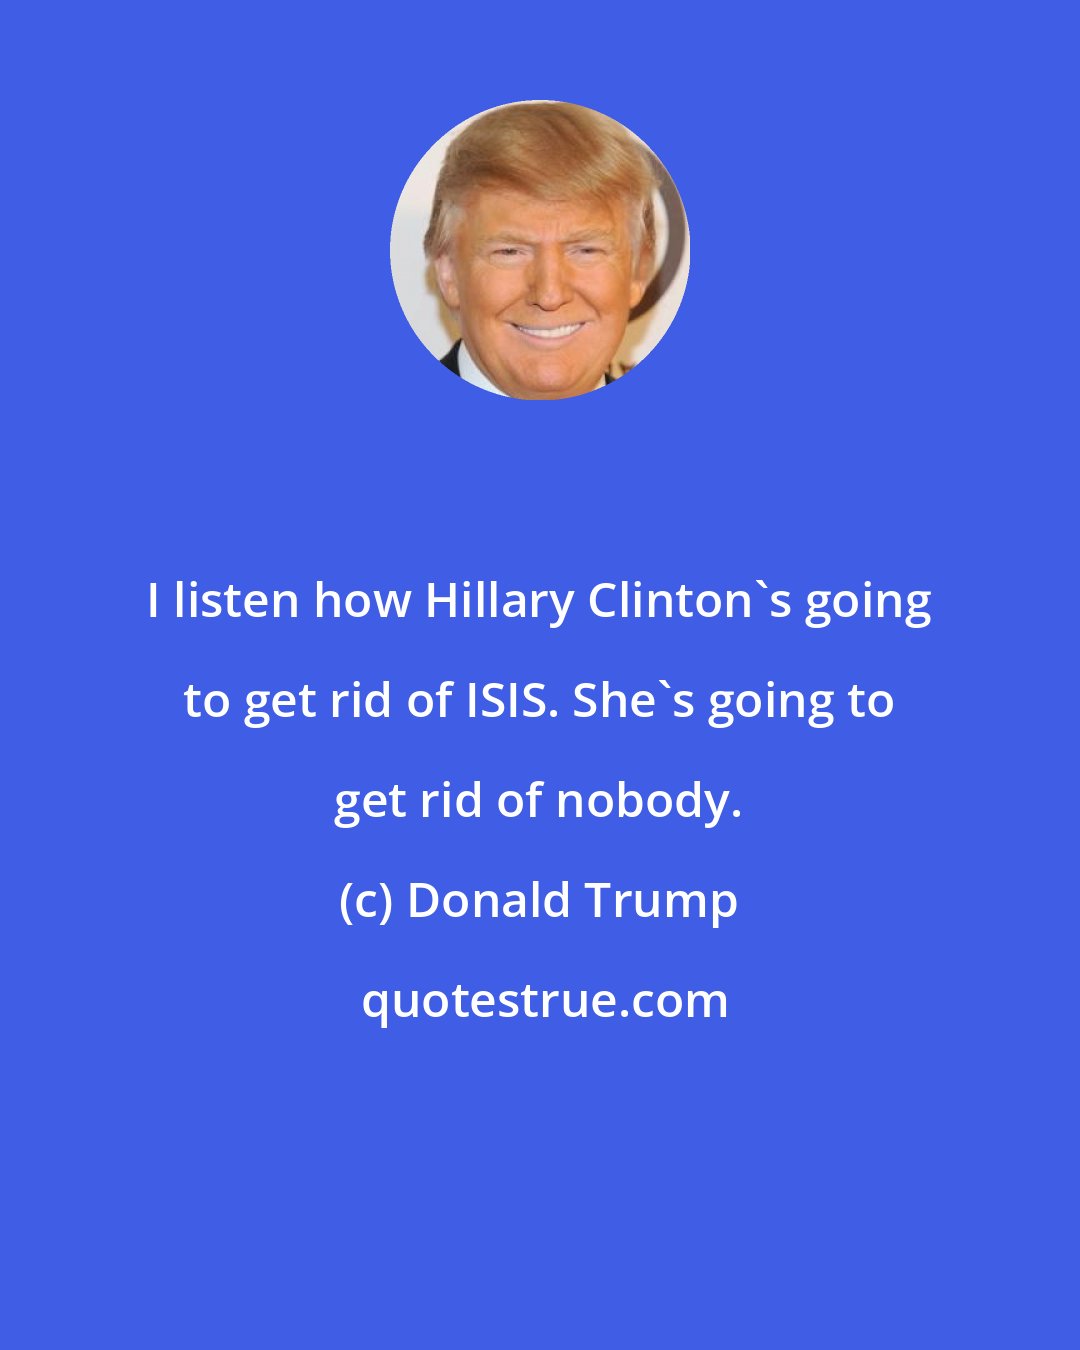 Donald Trump: I listen how Hillary Clinton's going to get rid of ISIS. She's going to get rid of nobody.